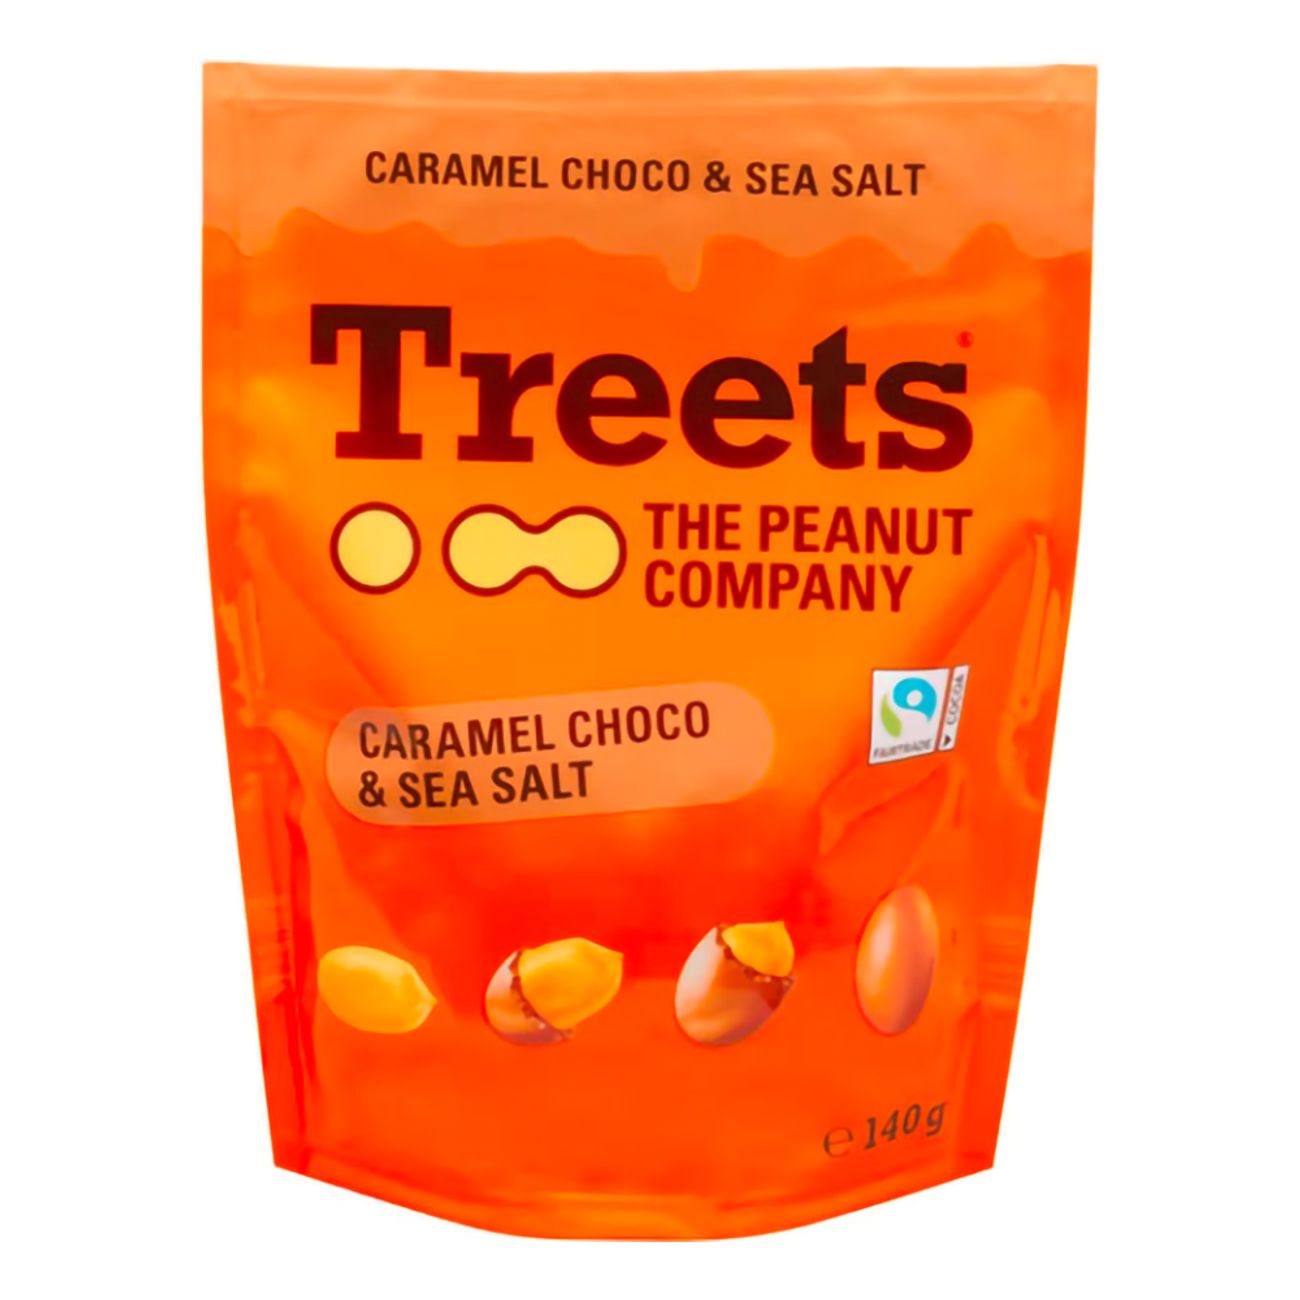 treets-caramel-choco-sea-salt-101712-1